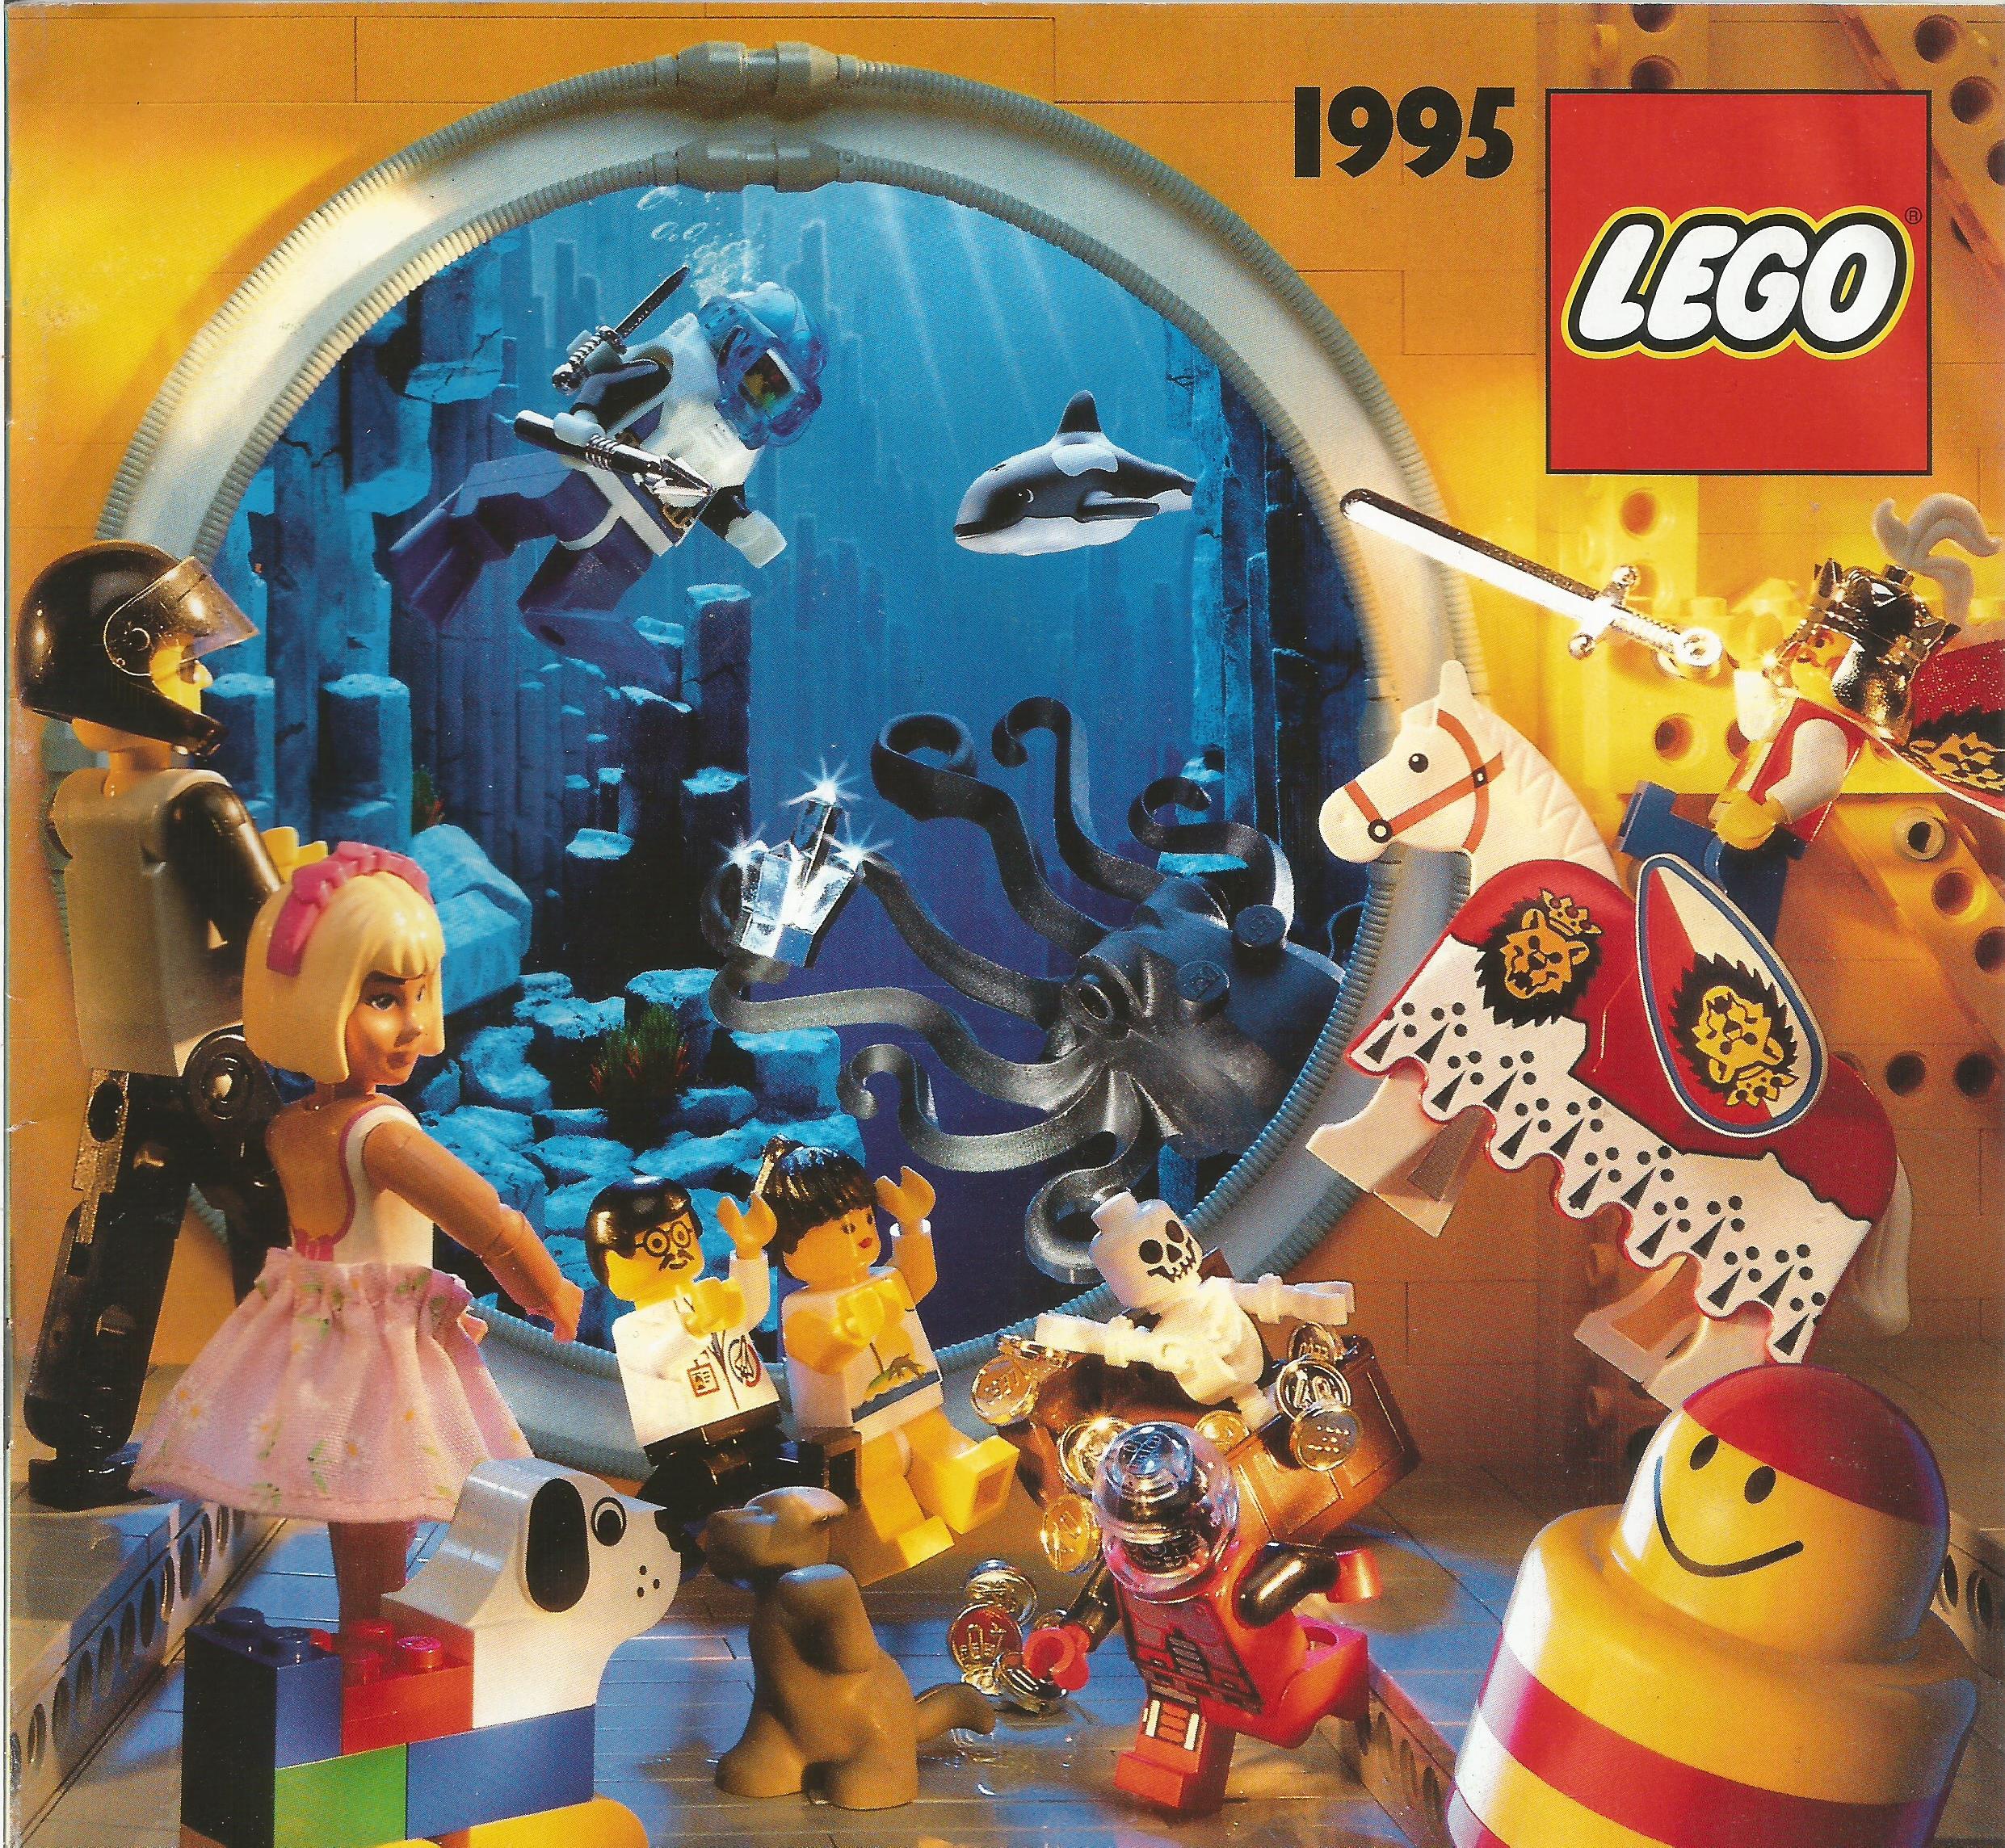 1995-ös magyar Lego katalógus